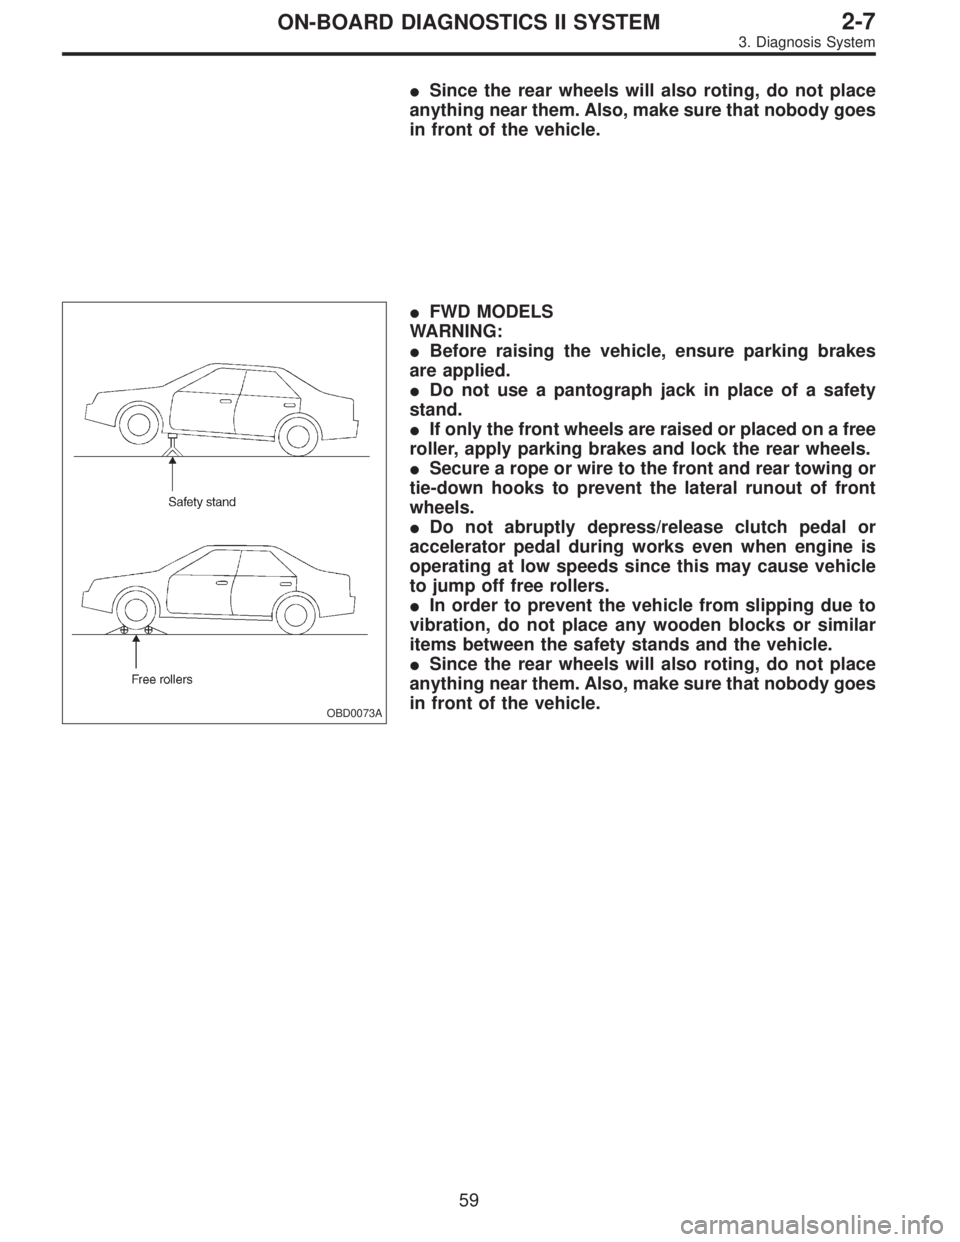 SUBARU LEGACY 1995  Service Repair Manual Since the rear wheels will also roting, do not place
anything near them. Also, make sure that nobody goes
in front of the vehicle.
OBD0073A
FWD MODELS
WARNING:
Before raising the vehicle, ensure pa